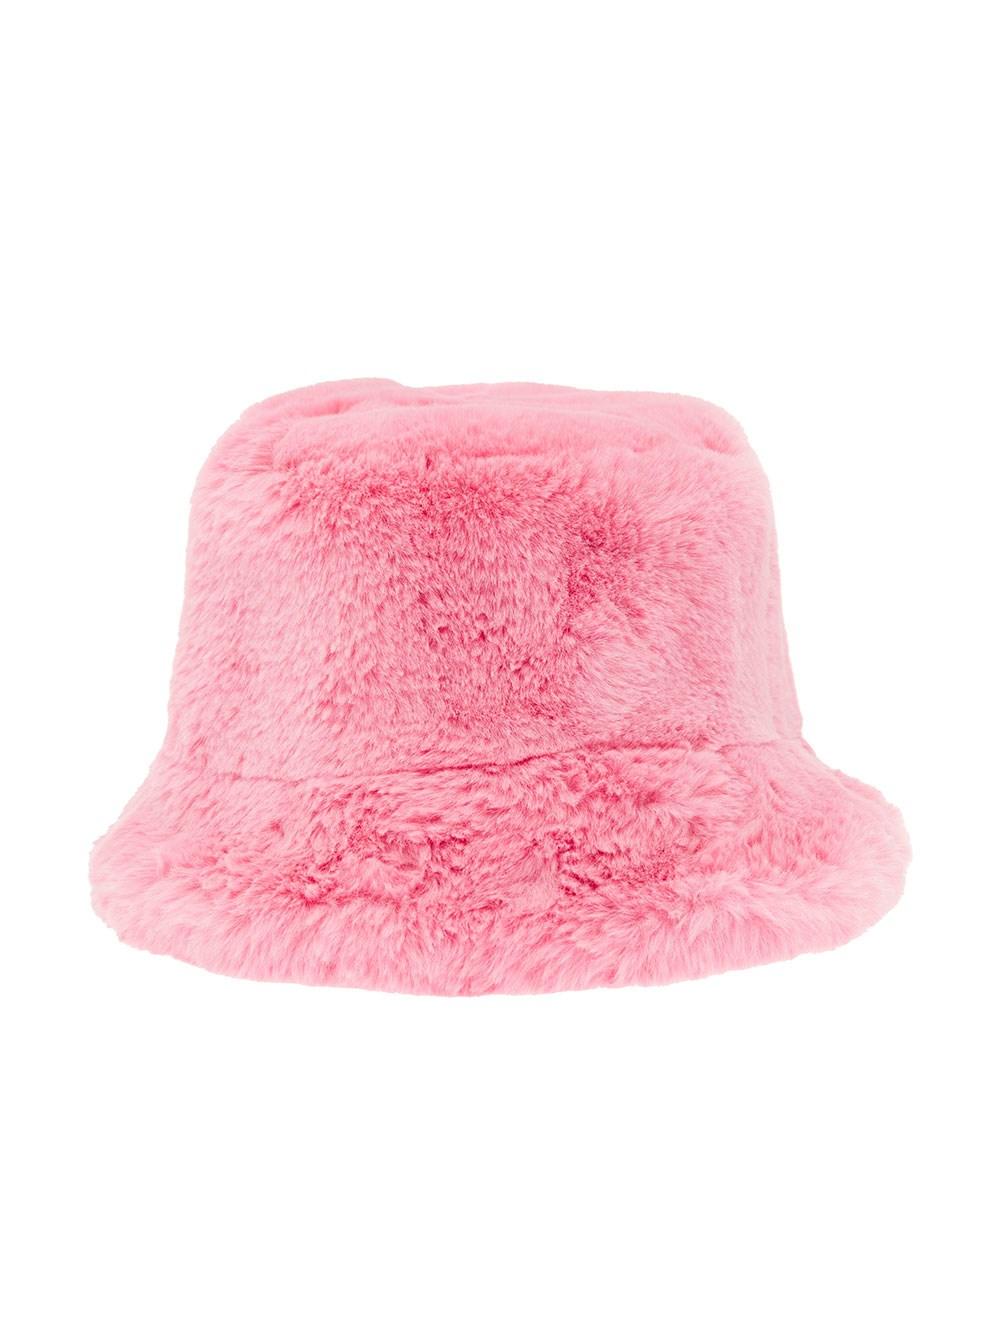 Apparis 'gilly Koba' Faux Fur Hat in Pink | Lyst